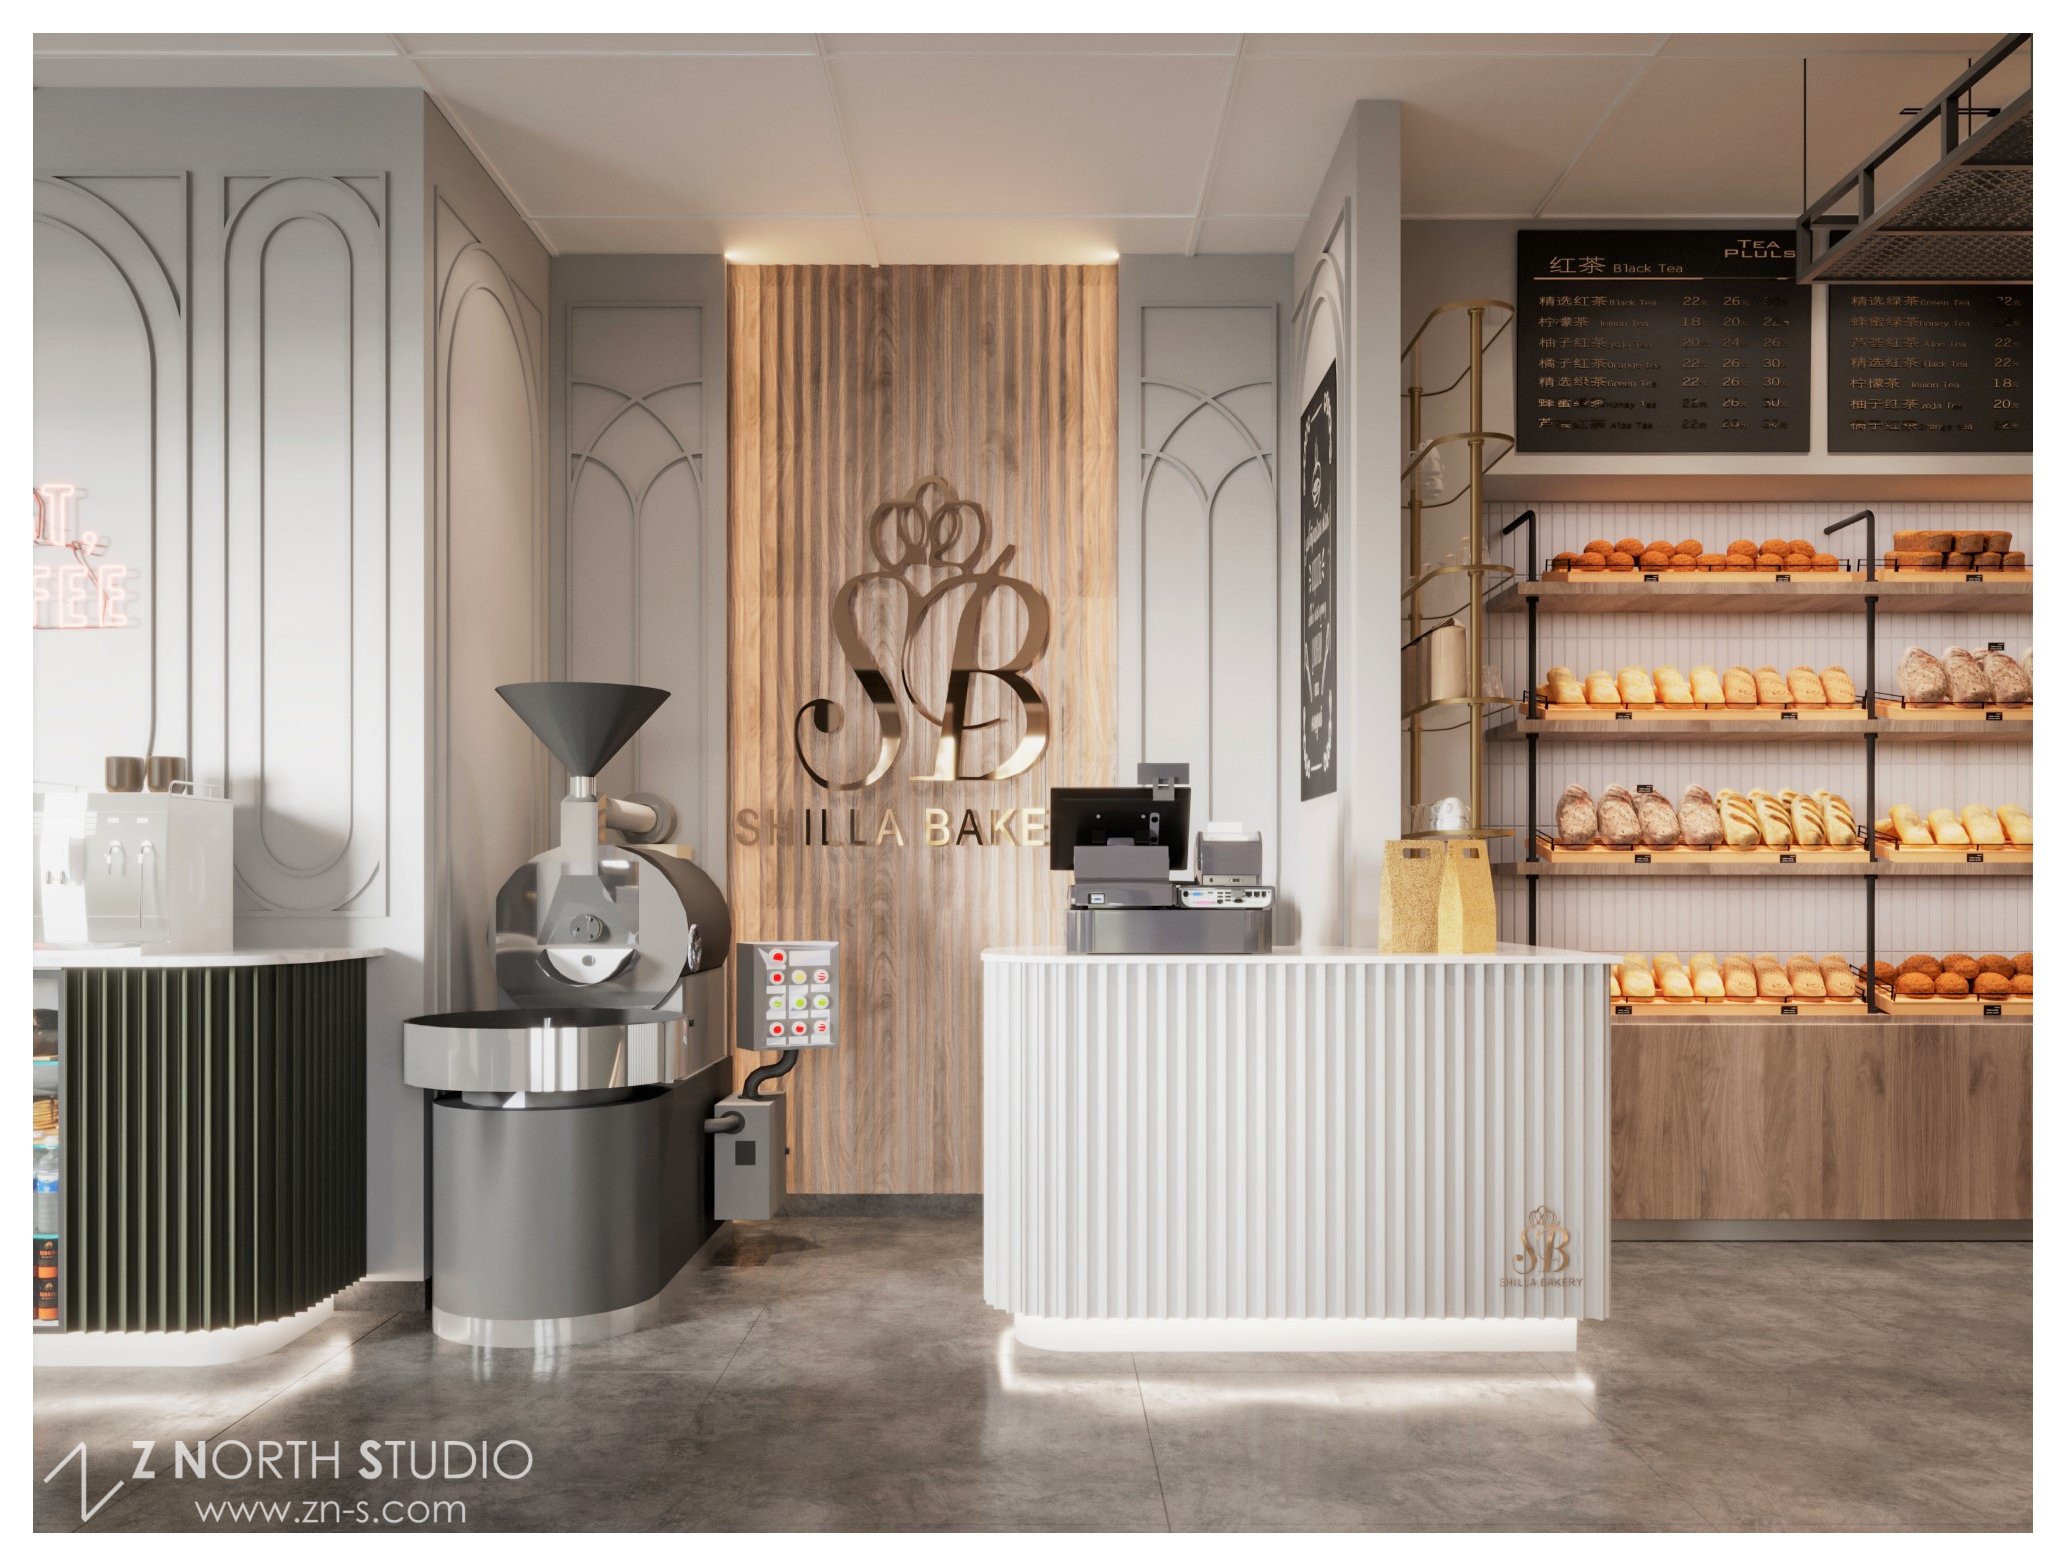 shilla bakery usa interior design z north Studio dc (7).jpg